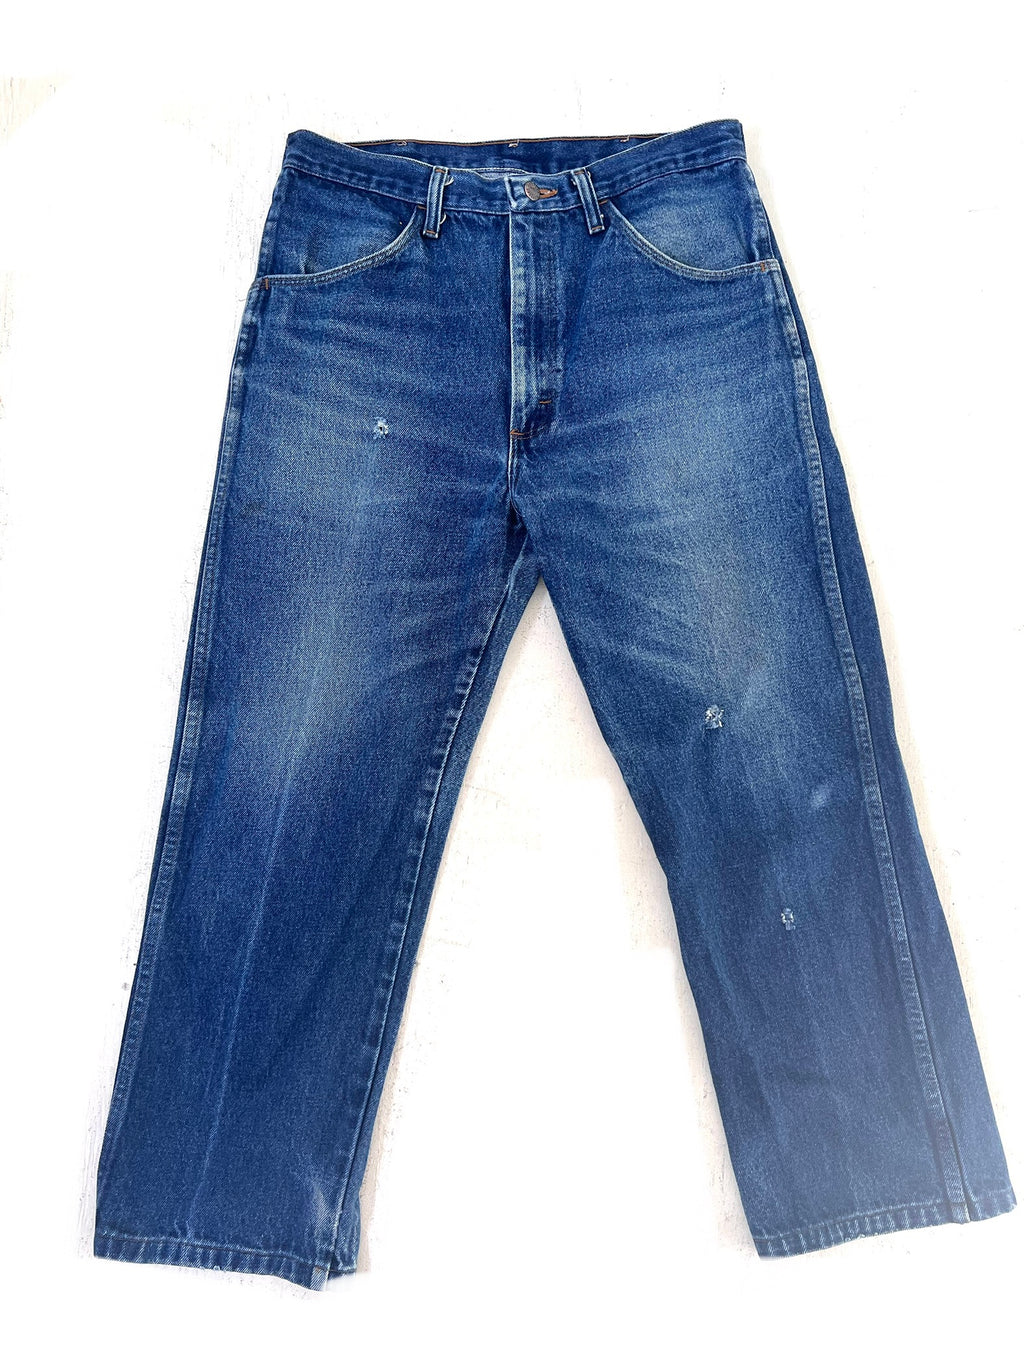 Vintage Rustler Zip Fly Jeans 34 x 31